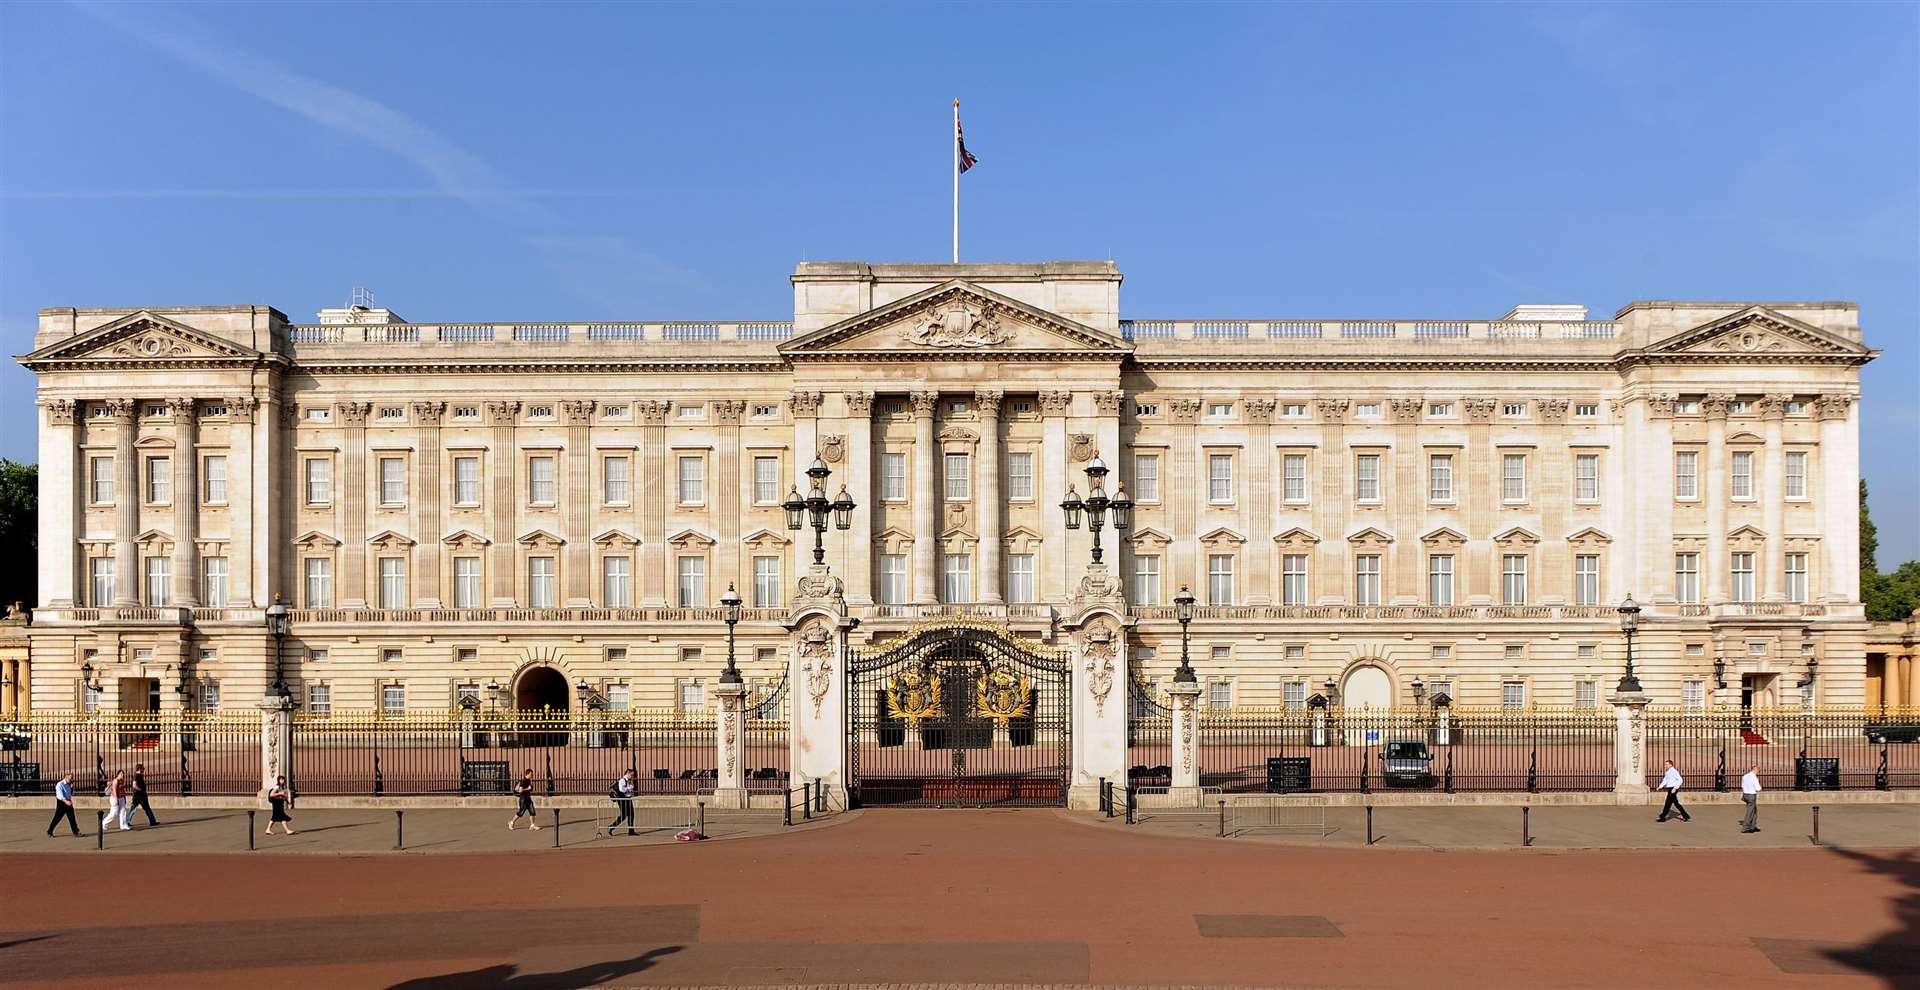 Buckingham Palace is undergoing major building work (Anthony Devlin/PA)